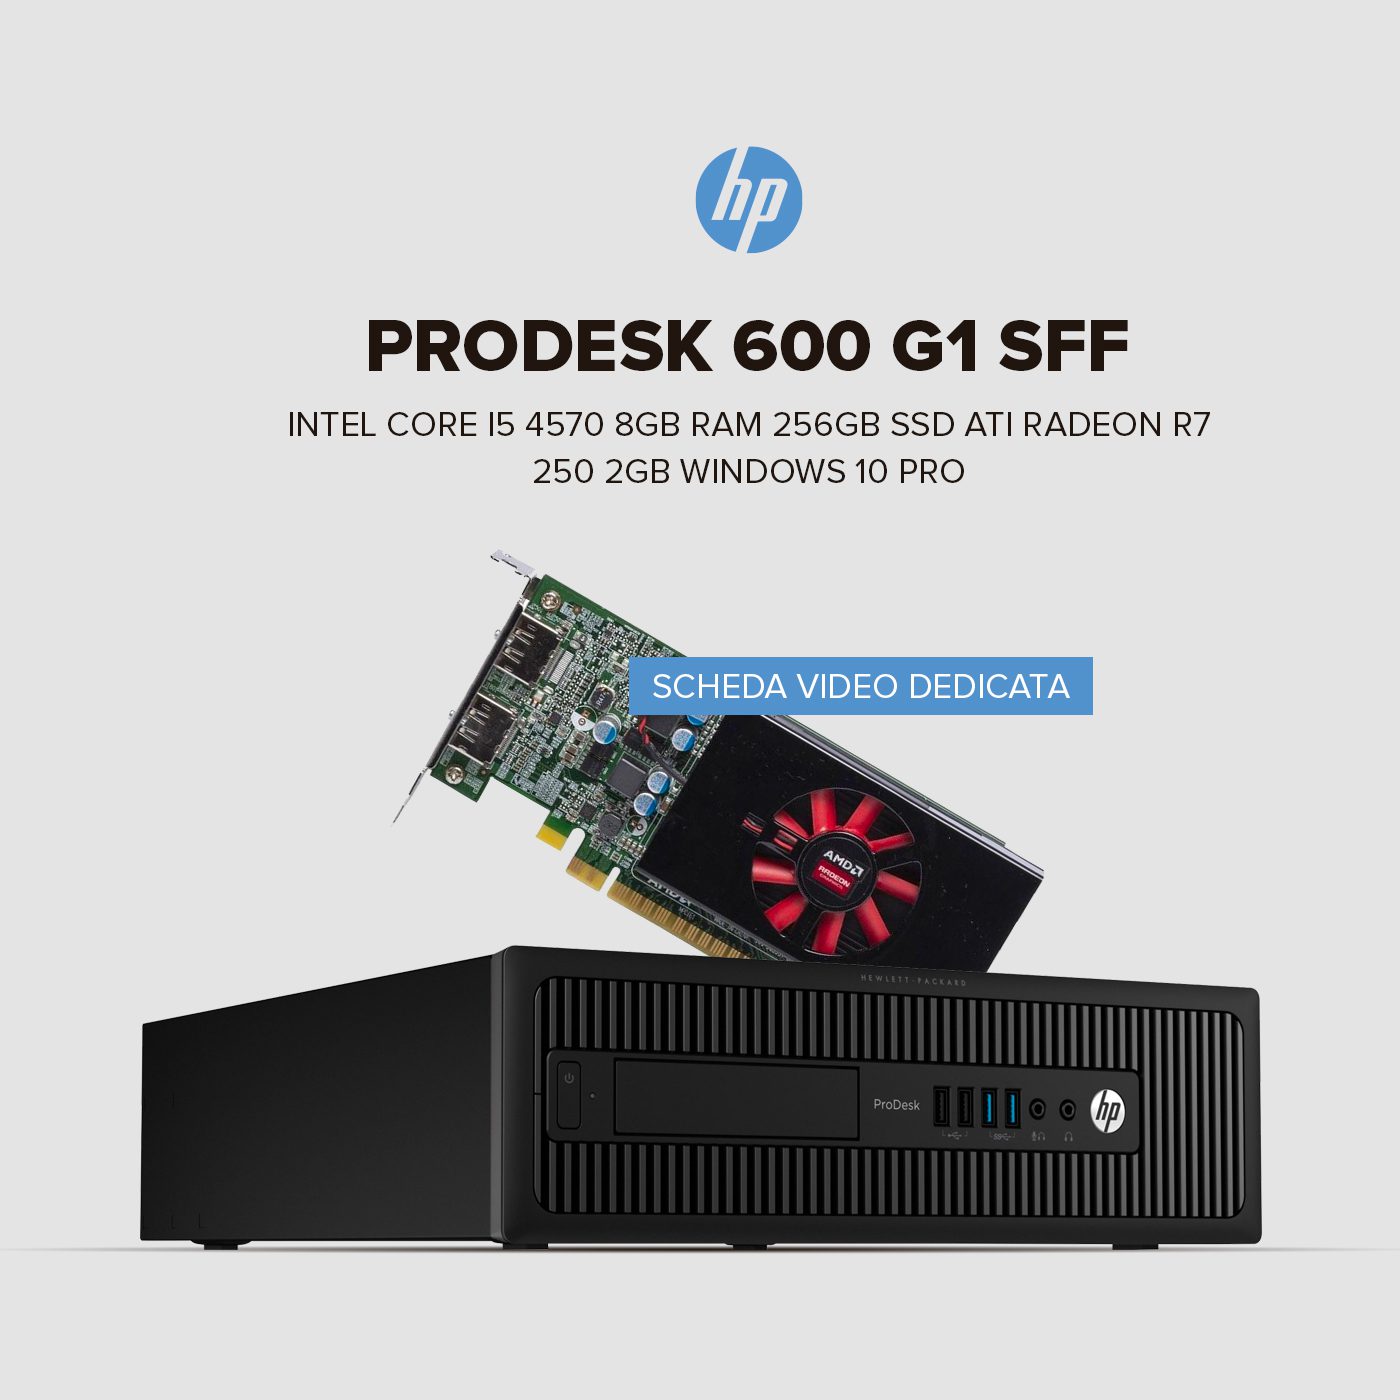 HP Prodesk 600 g1 SFF Intel Core i5 4570 8 GB RAM 256 GB SSD Ati Radeon R7 250 2 GB WINDOWS 10 PRO